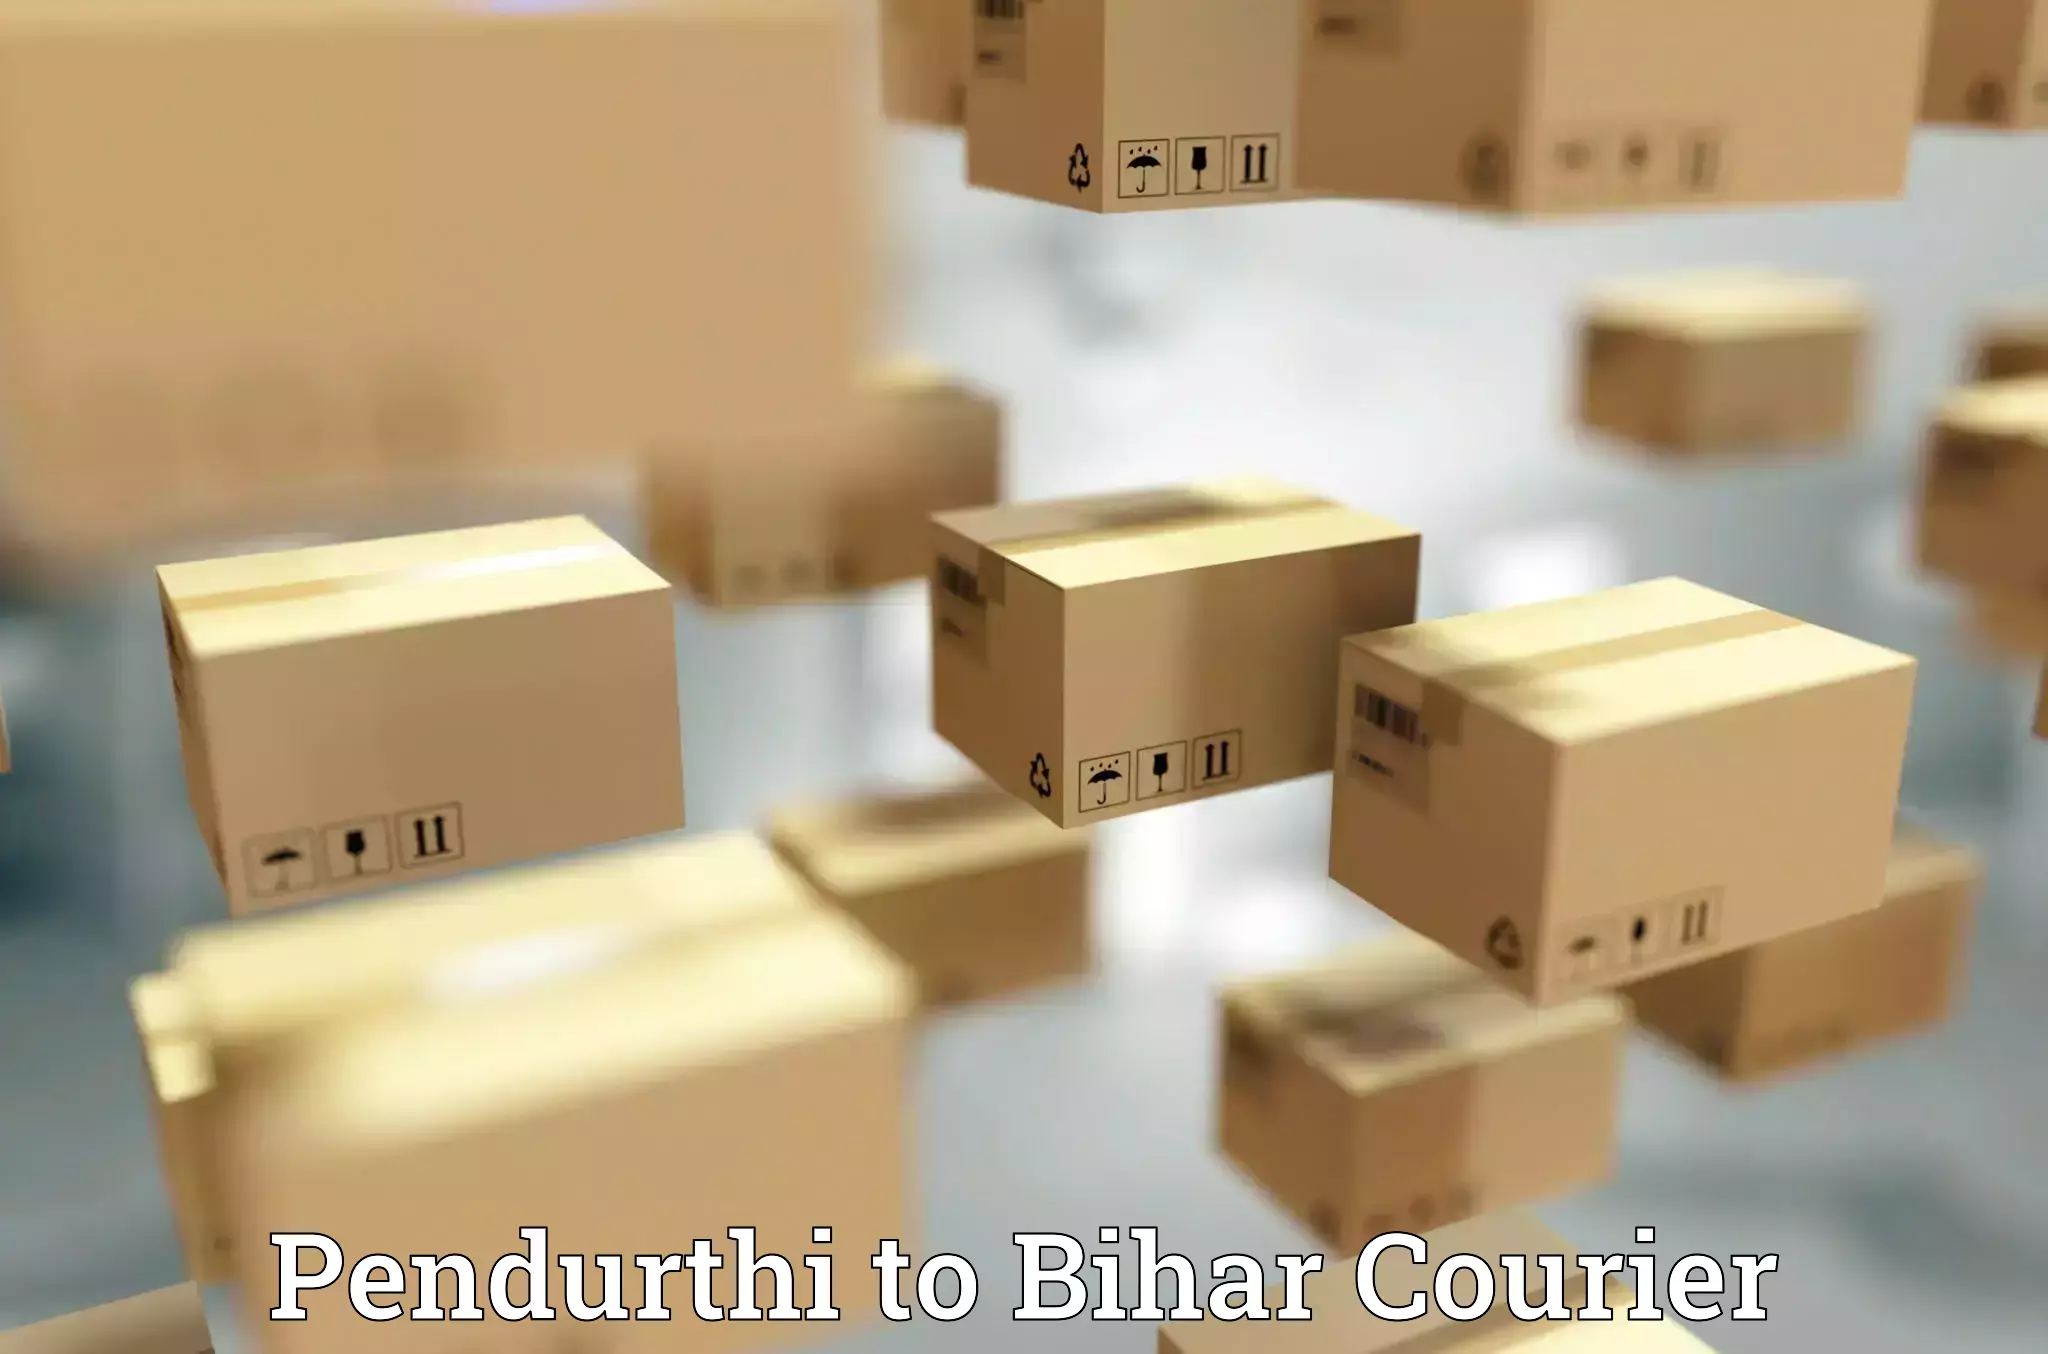 Courier service comparison Pendurthi to Bhojpur